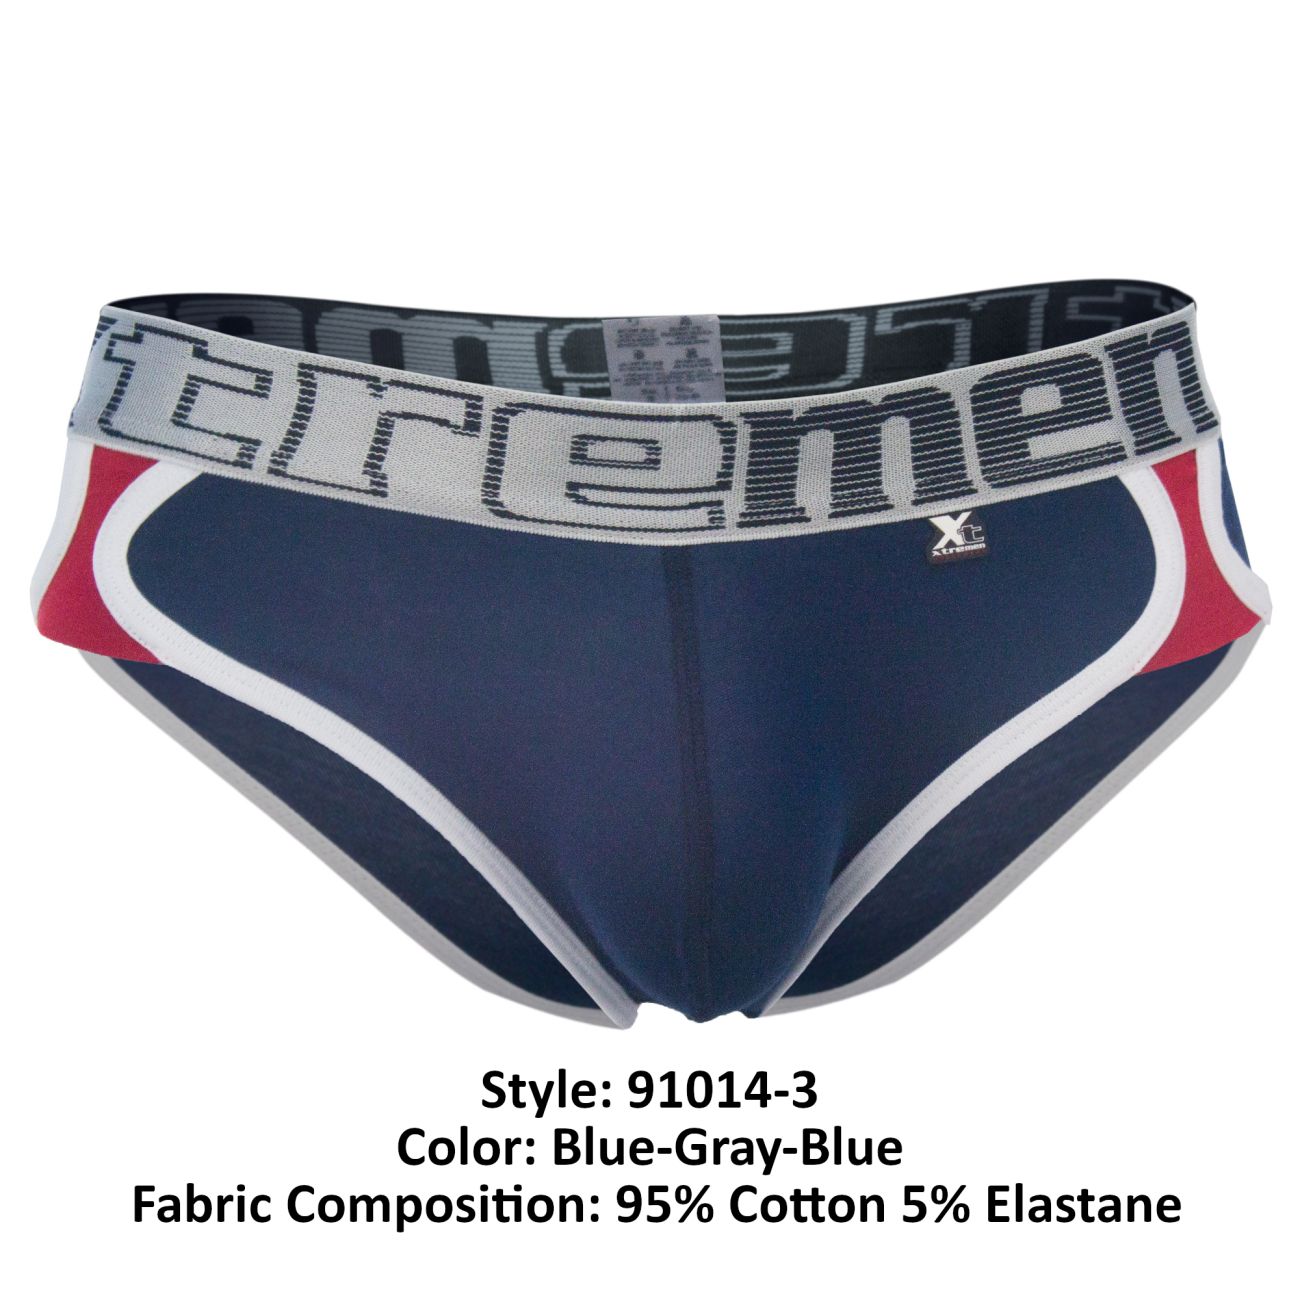 Xtremen 91014-3 3PK Briefs Blue-Gray-Blue